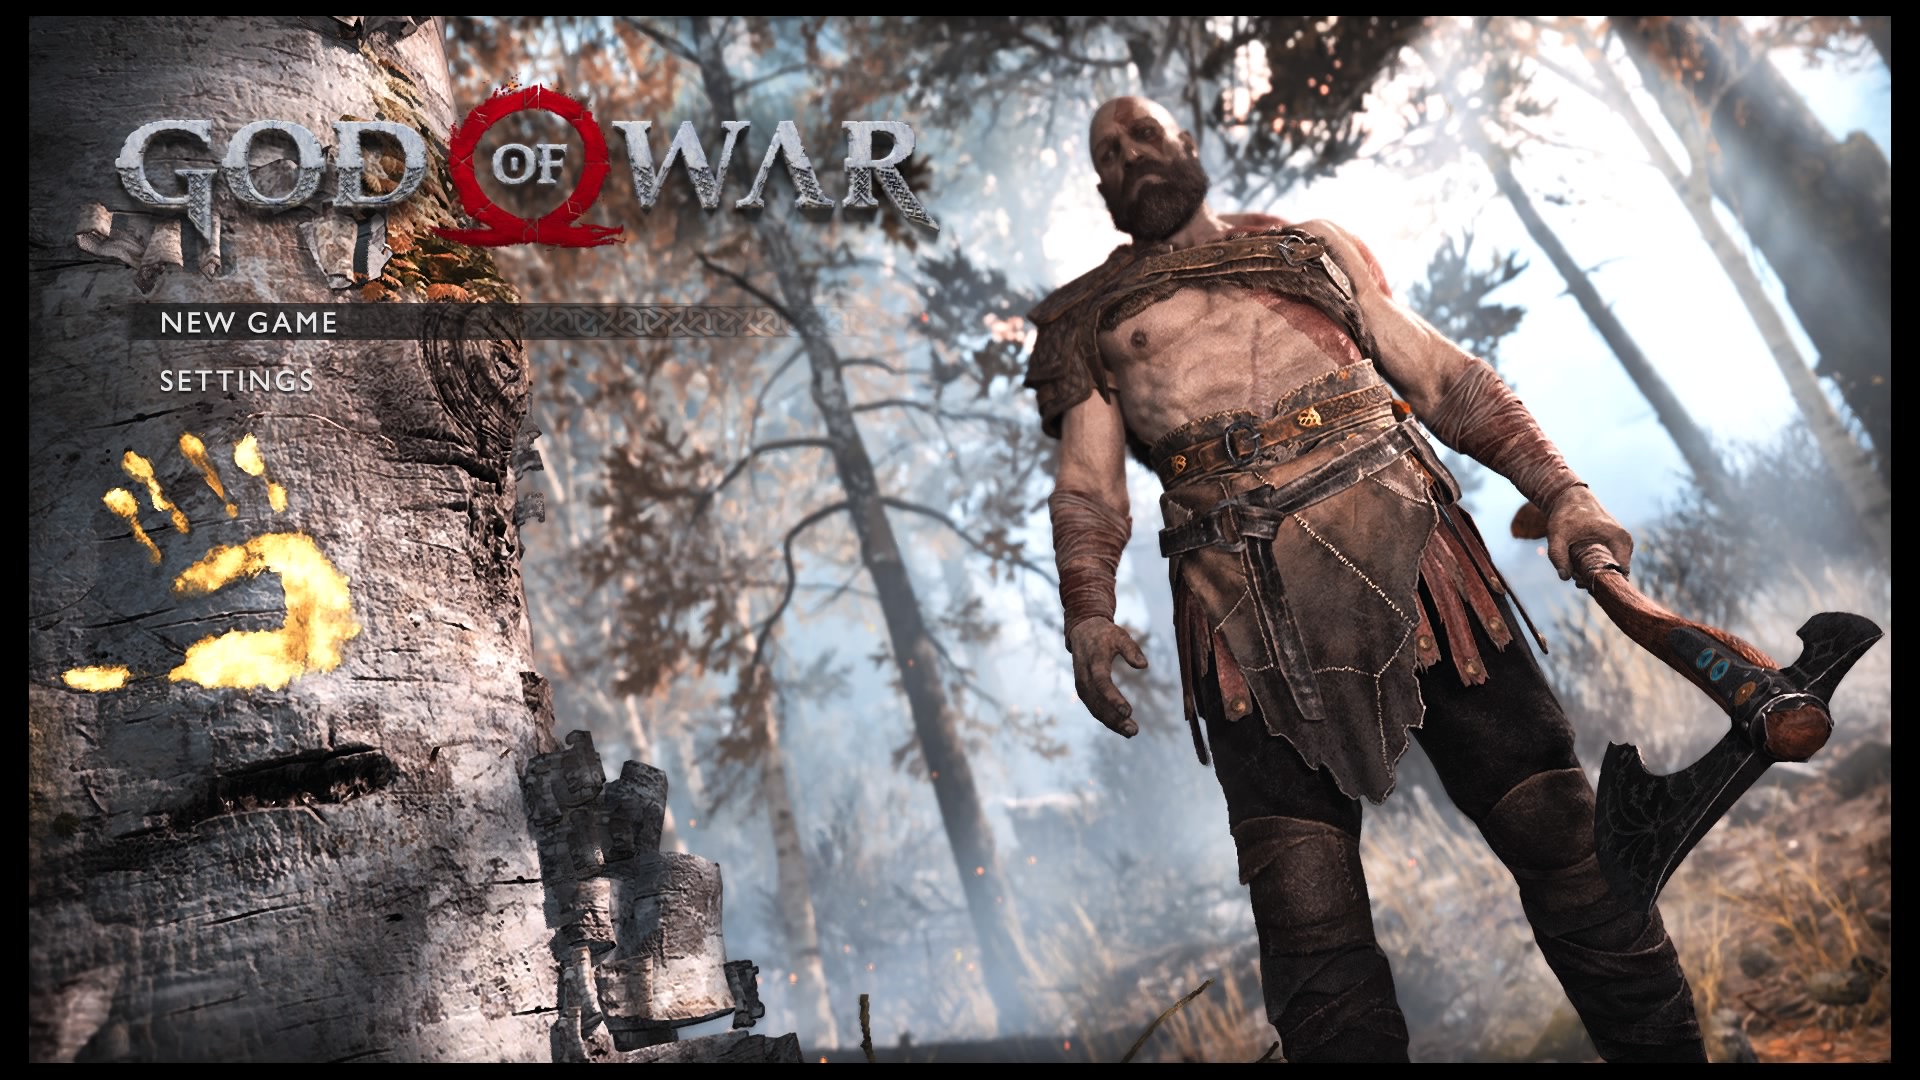 God of War Ragnarok PC Release Date, All Latest Details, Hindi